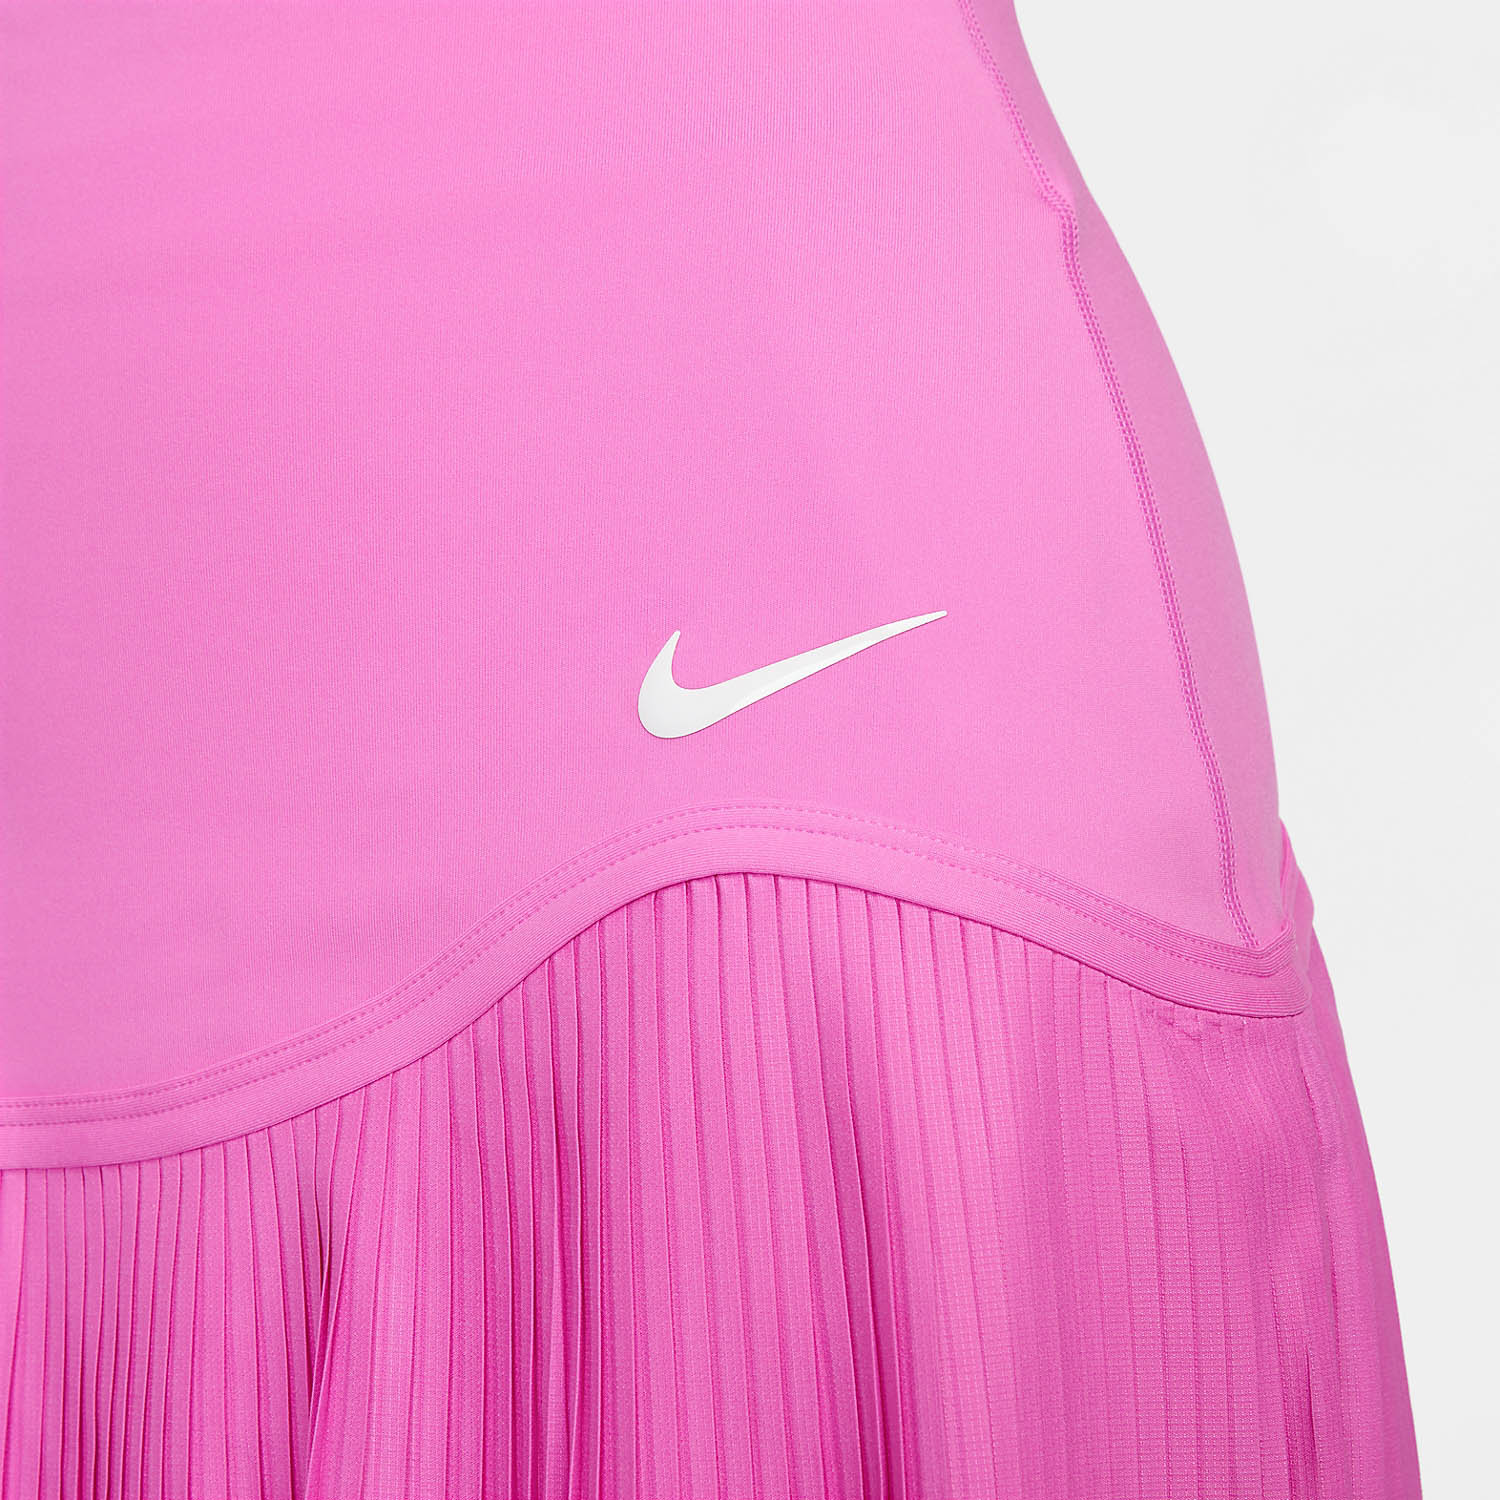 Nike Advantage Gonna - Playful Pink/Black